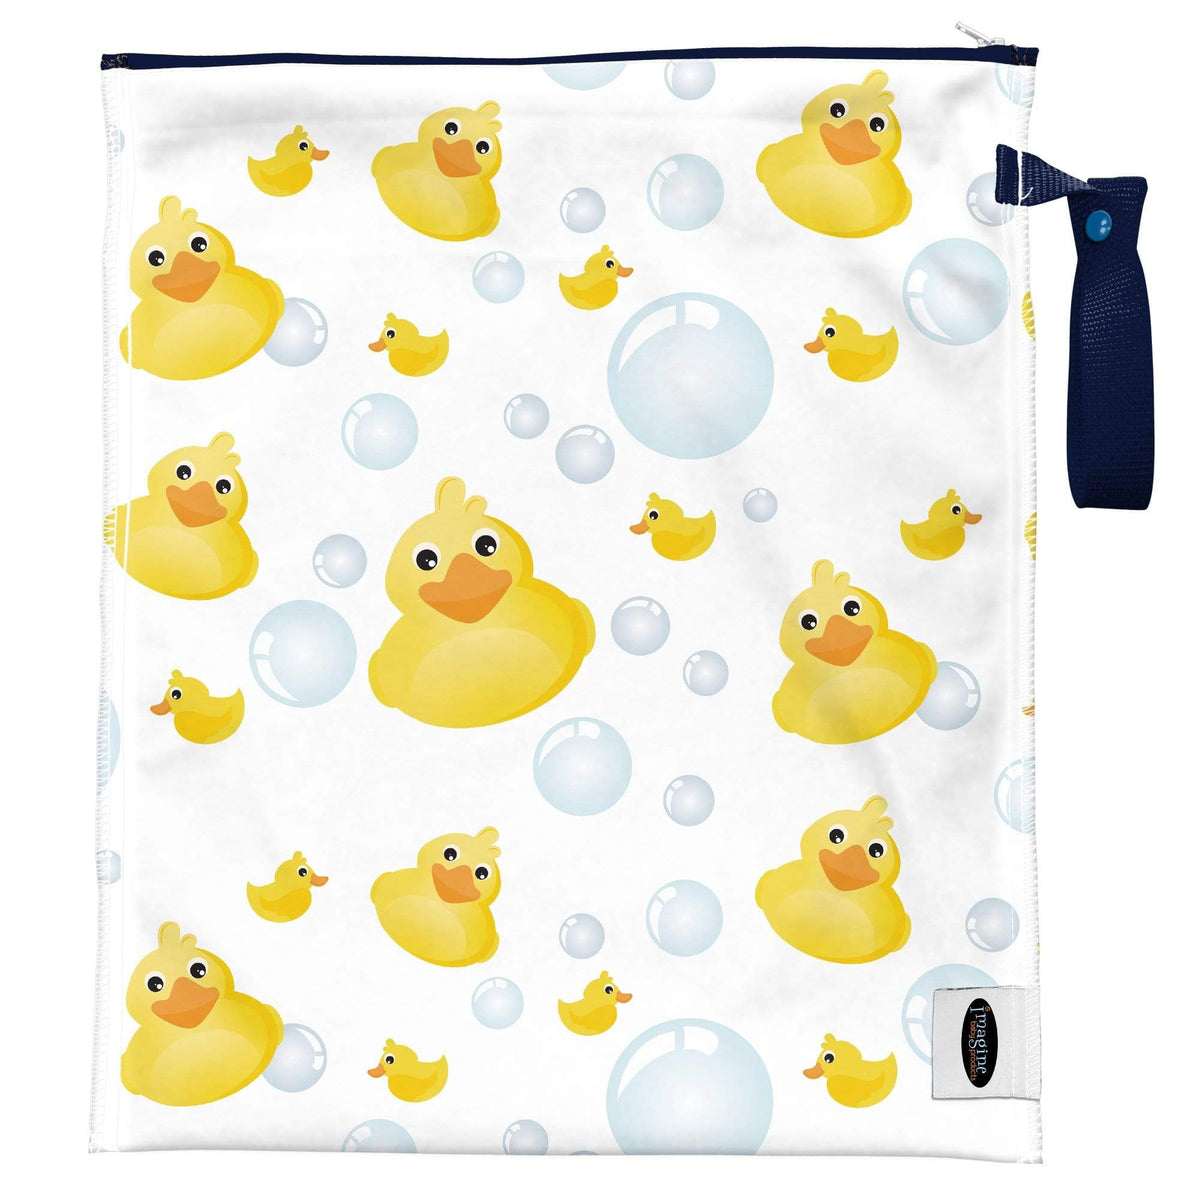 CLEARANCE: Imagine Baby Medium Wet Bag Splish Splash